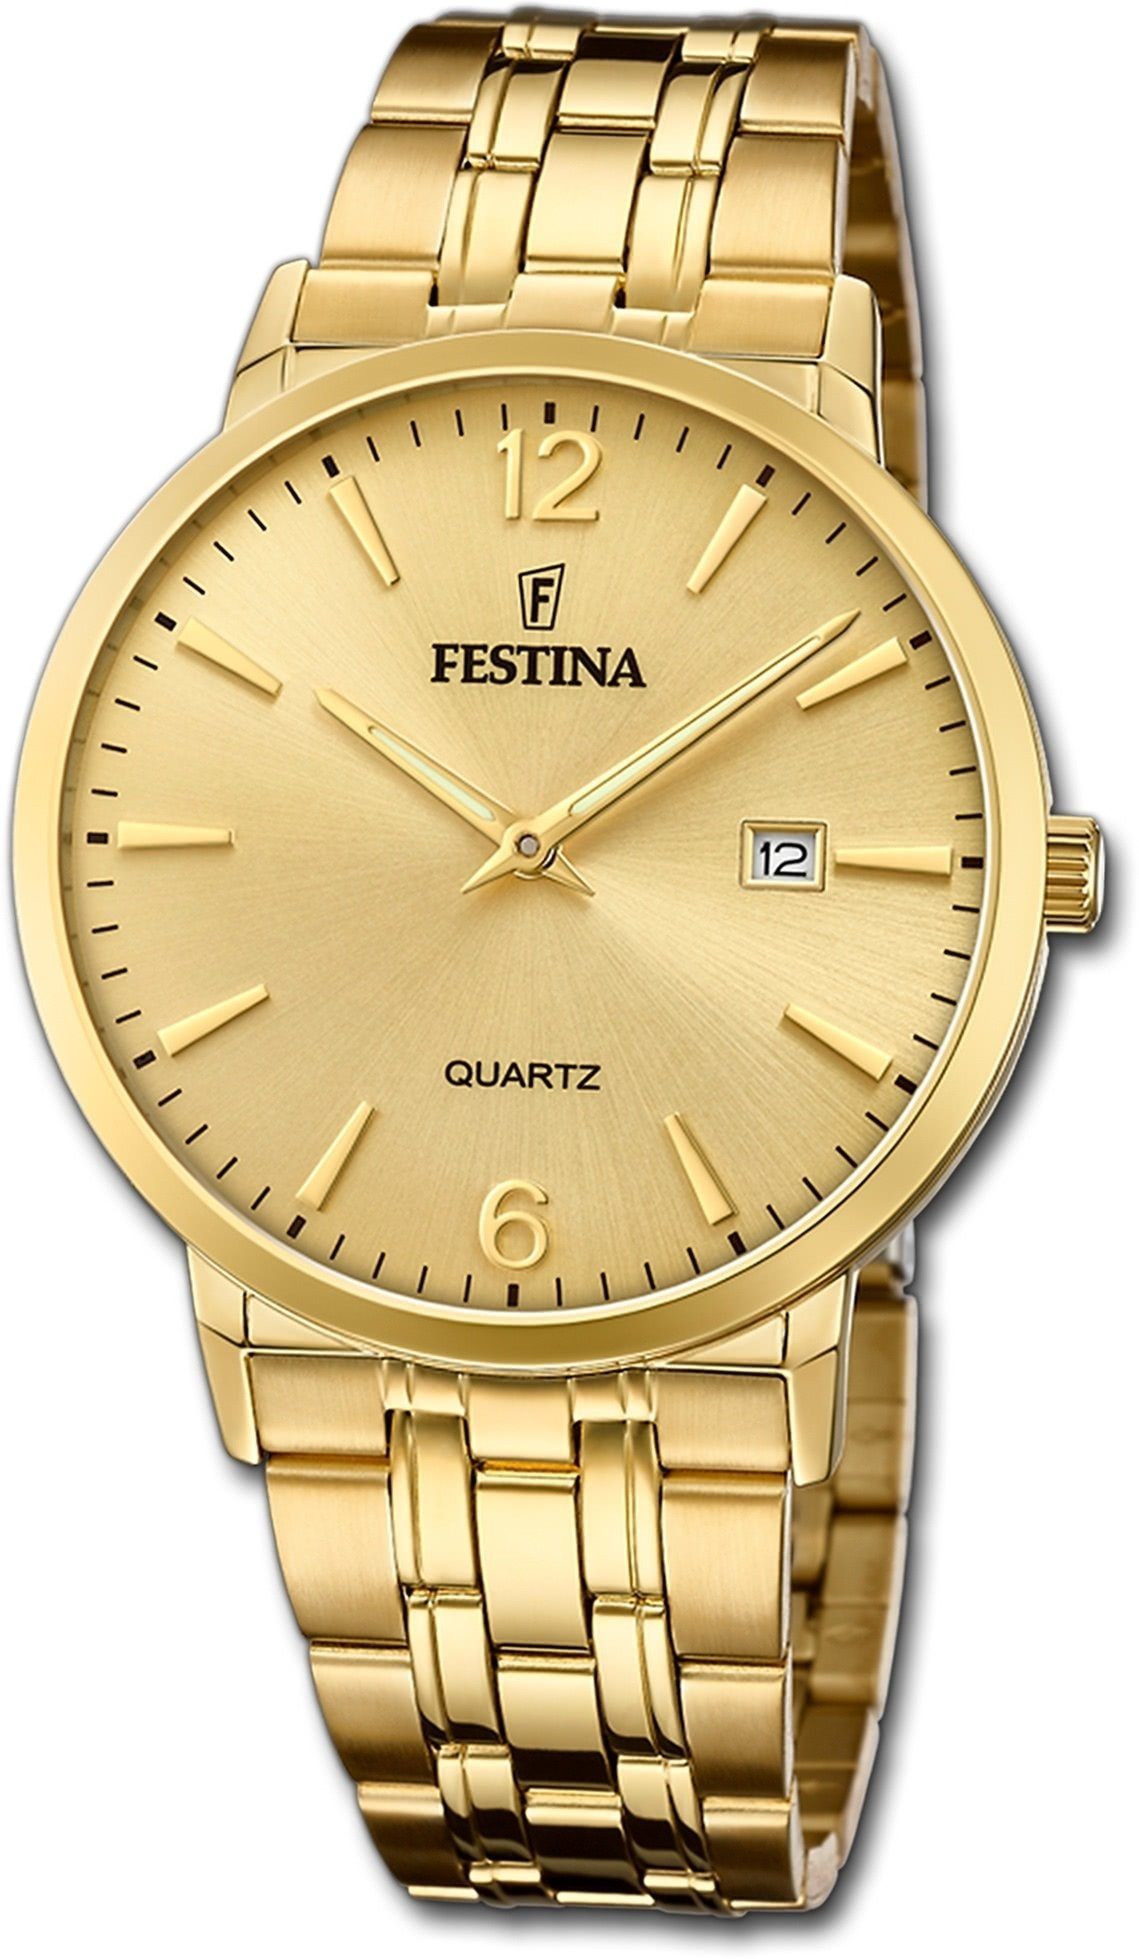 Uhr, Herren Elegant Quarzuhr Herrenuhr gold, Festina Edelstahl rund, groß (ca. Edelstahlarmband 40,5mm) Festina